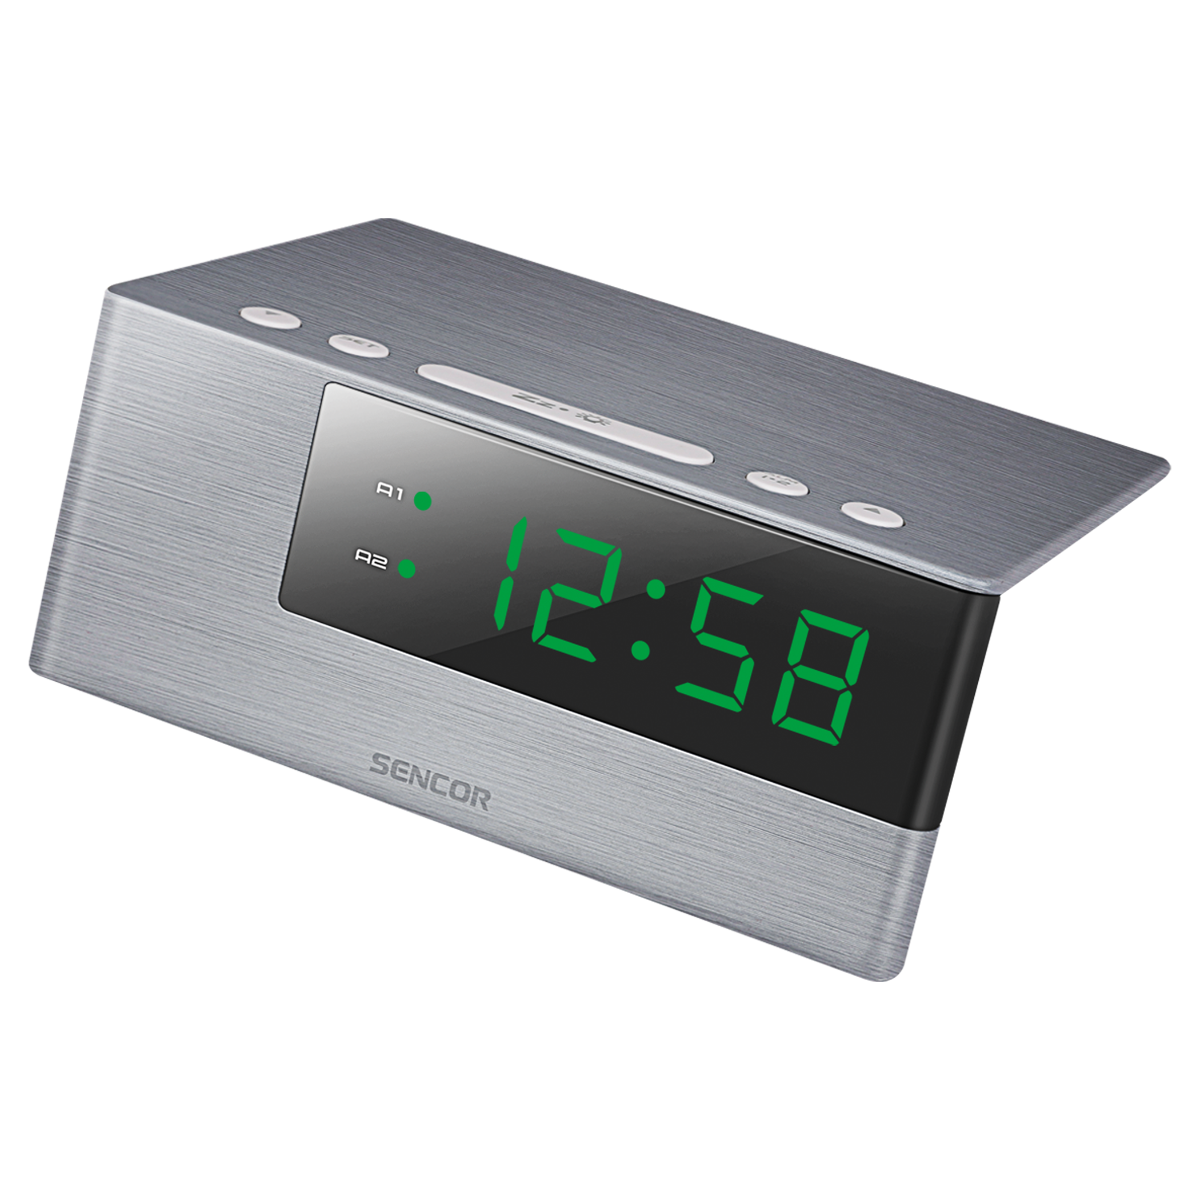 Ceas digital cu alarma SDC 4600 GR Sencor, LED 0.6